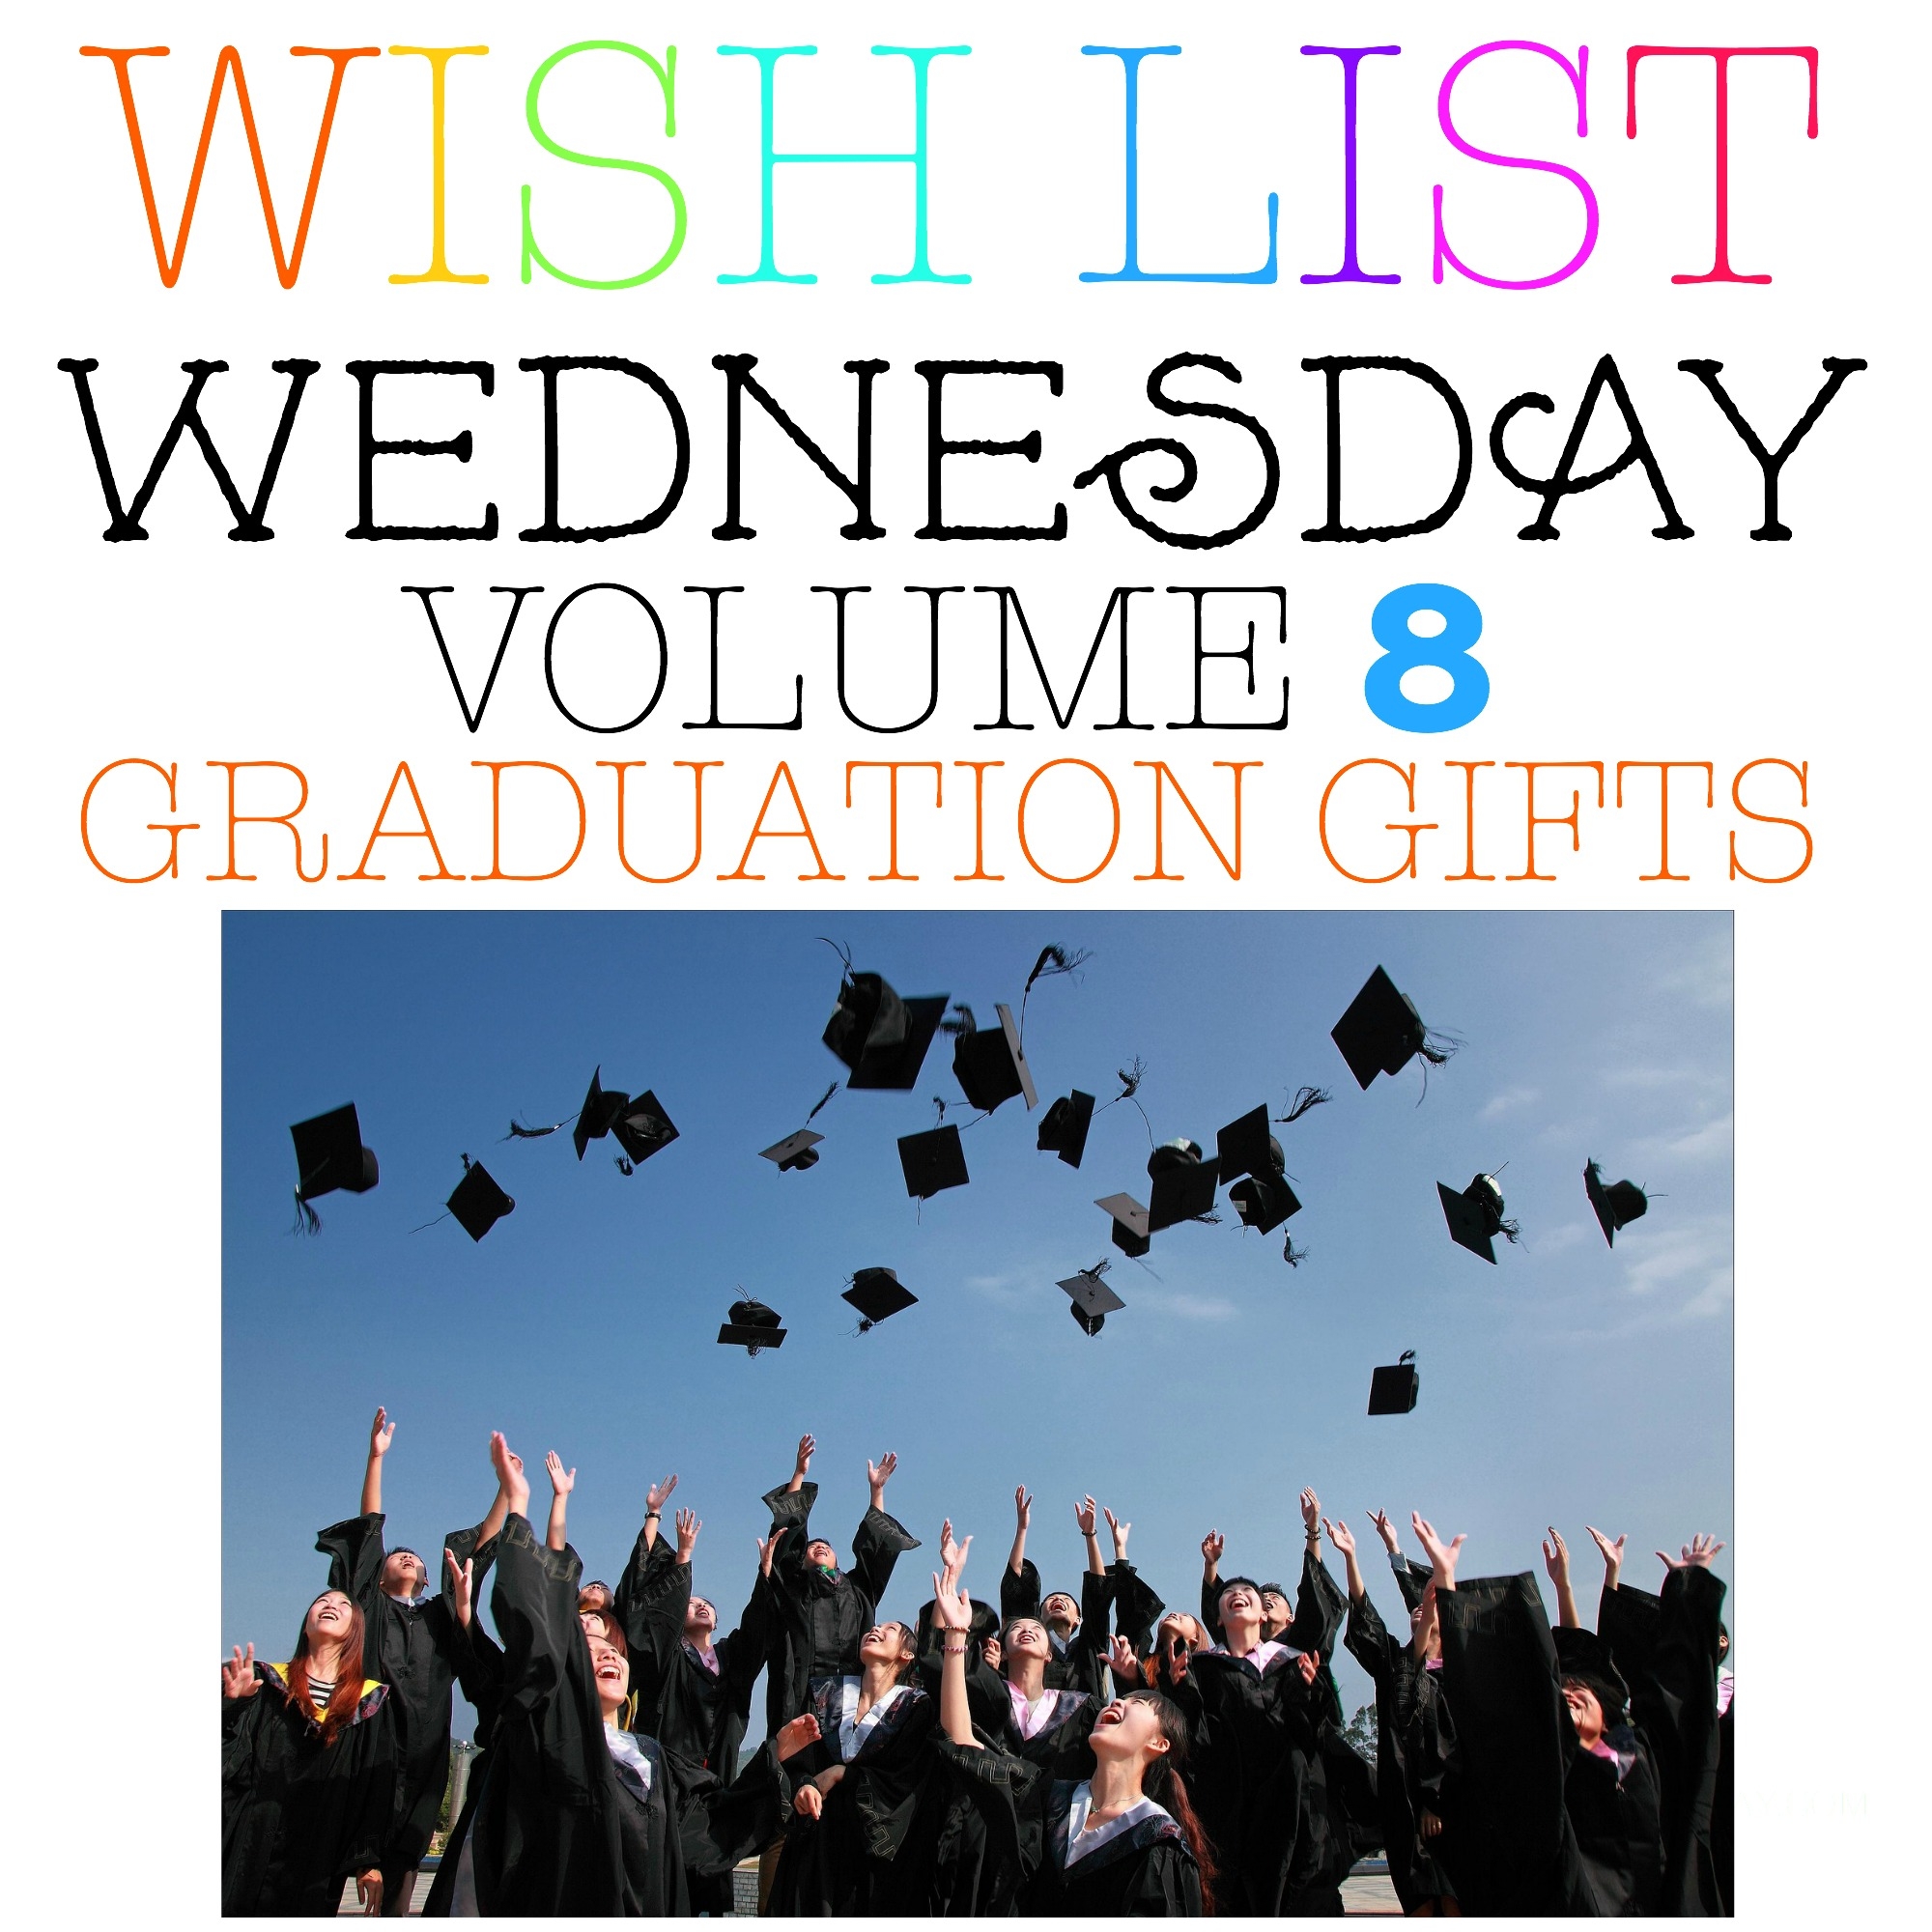 GRADUATION GIFTS - WISH LIST WEDNESDAY #8